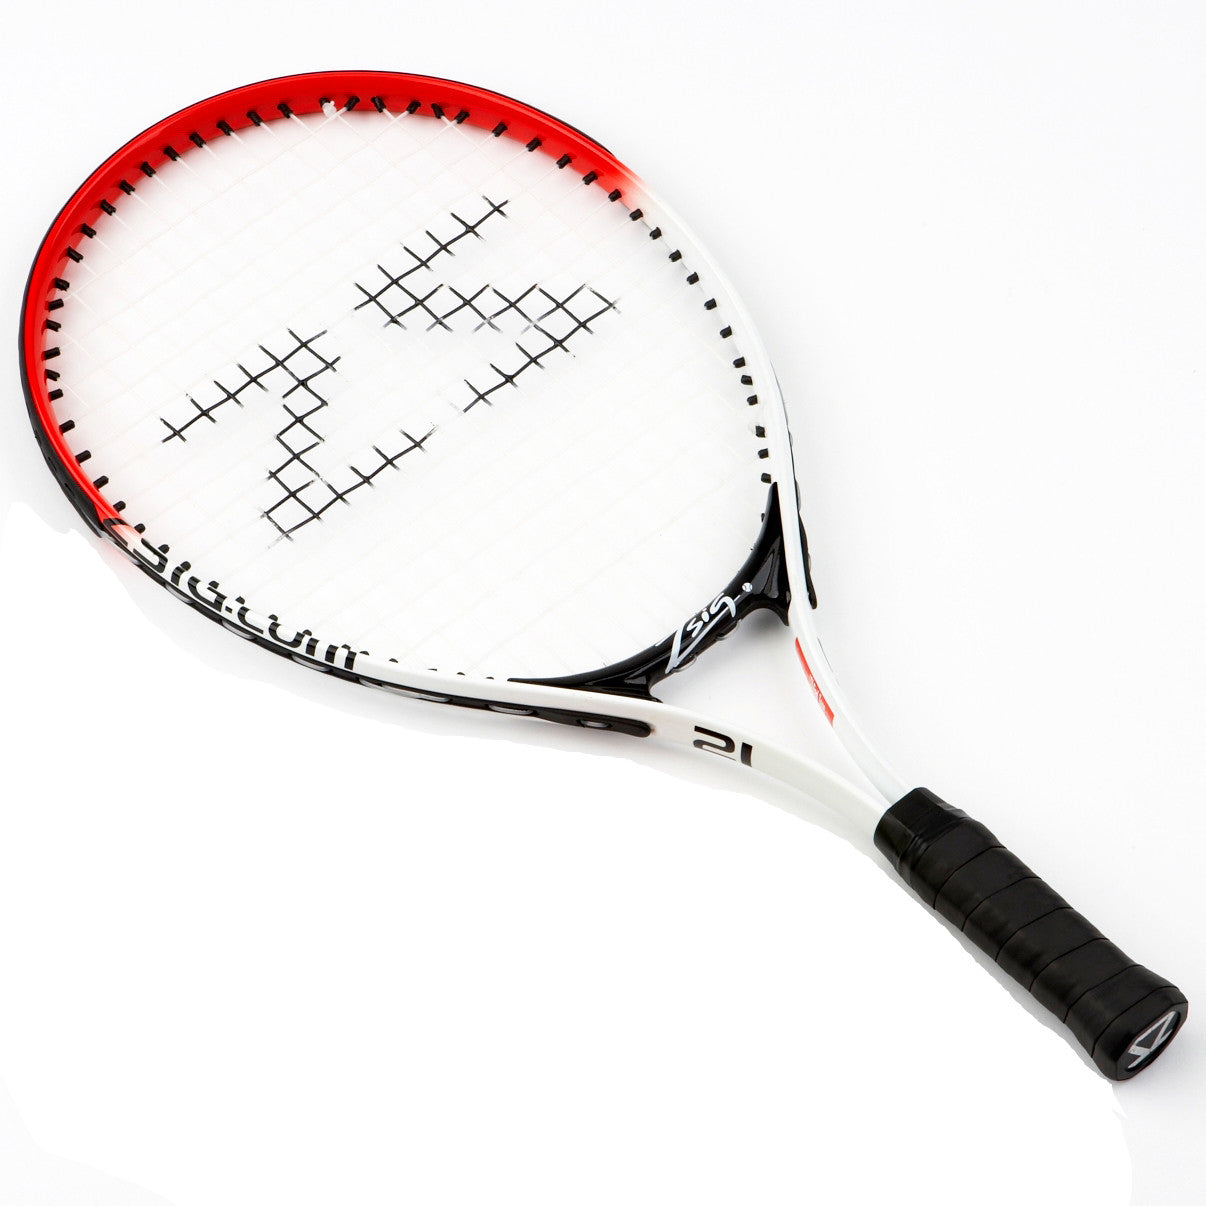 ZSig's 21 inch Mini Tennis Racket